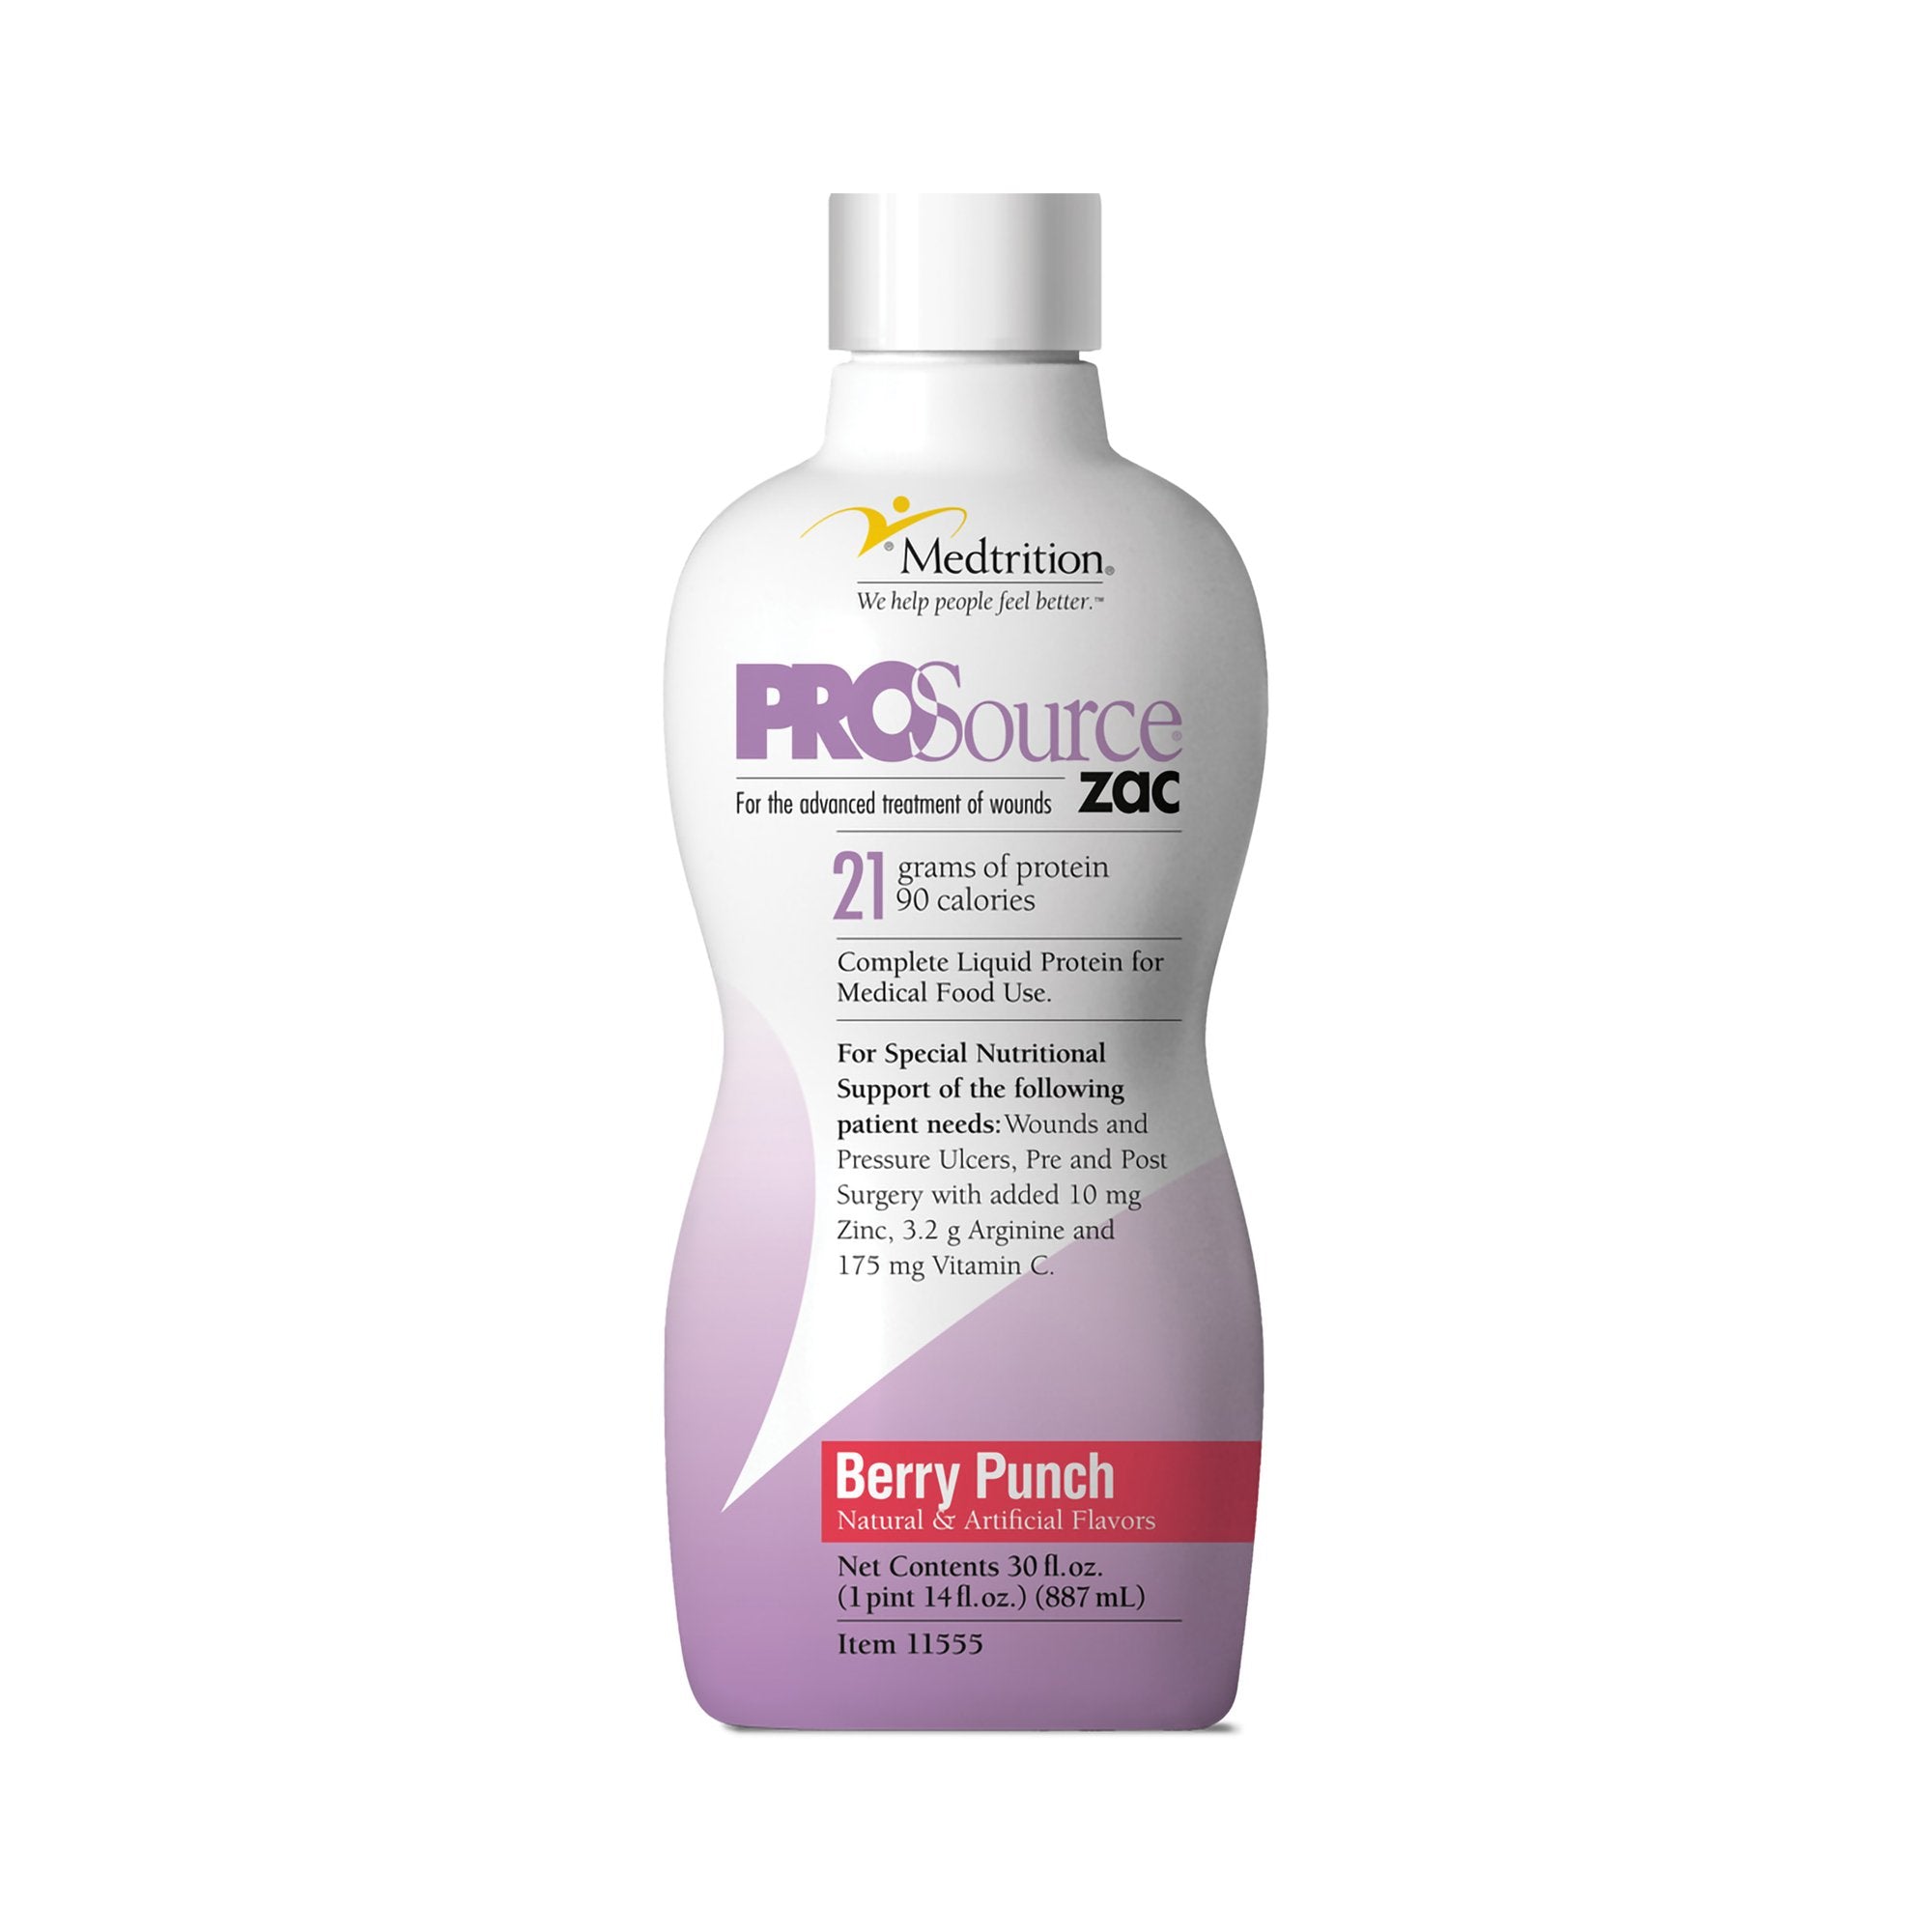 ProSource ZAC Protein Supplement, Berry Punch, 32 oz. Bottle -Case of 4